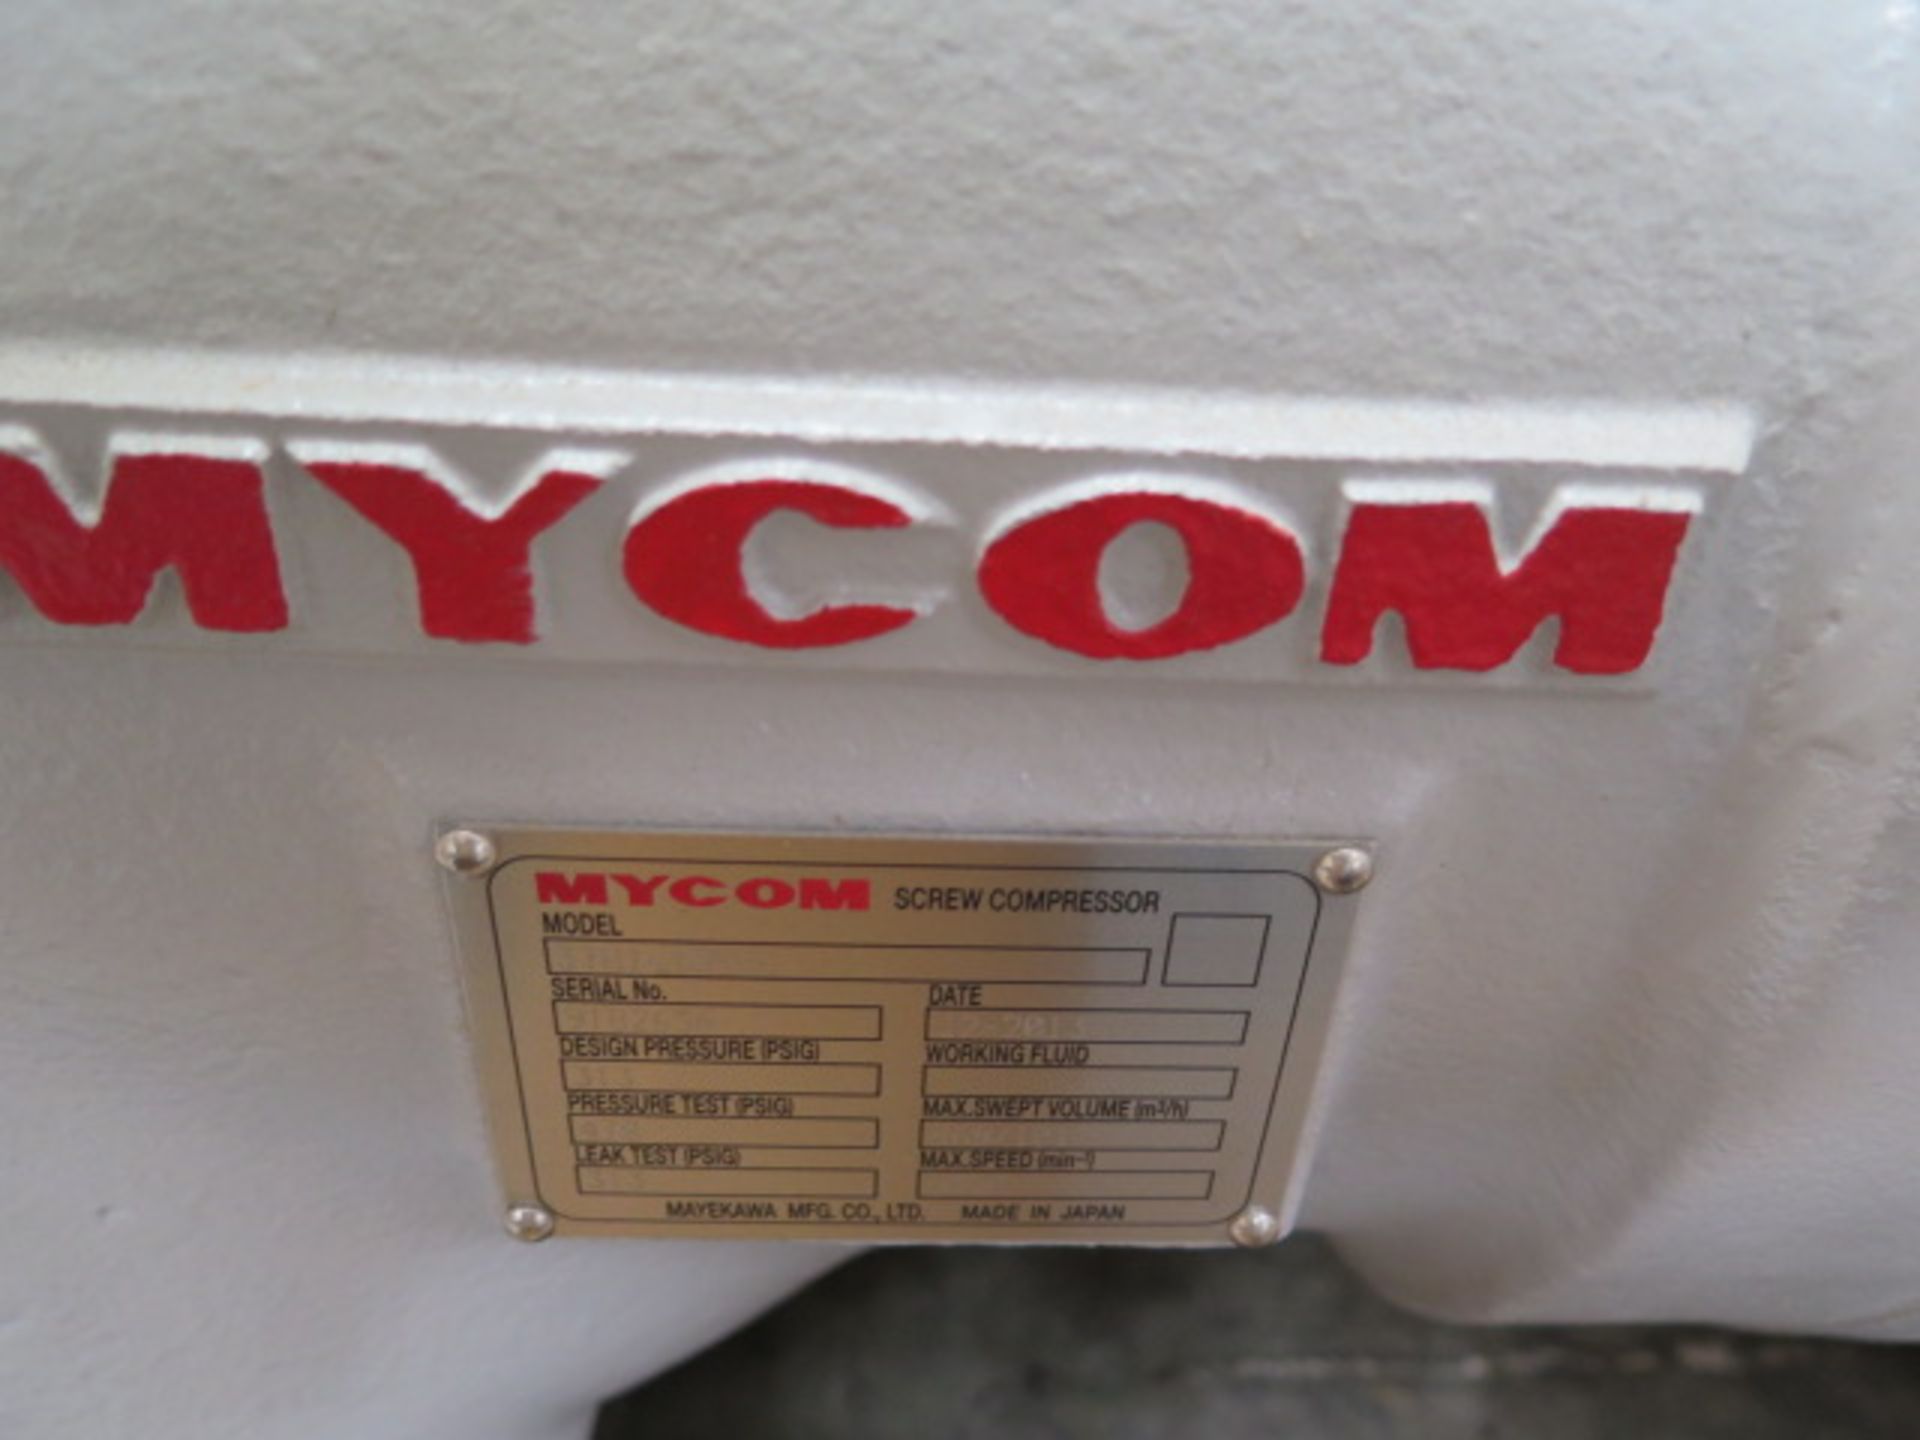 Mayekawa Mycom mdl. 37H1410SSC Screw Compressor 480V (SOLD AS-IS - NO WARRANTY) - Image 5 of 6